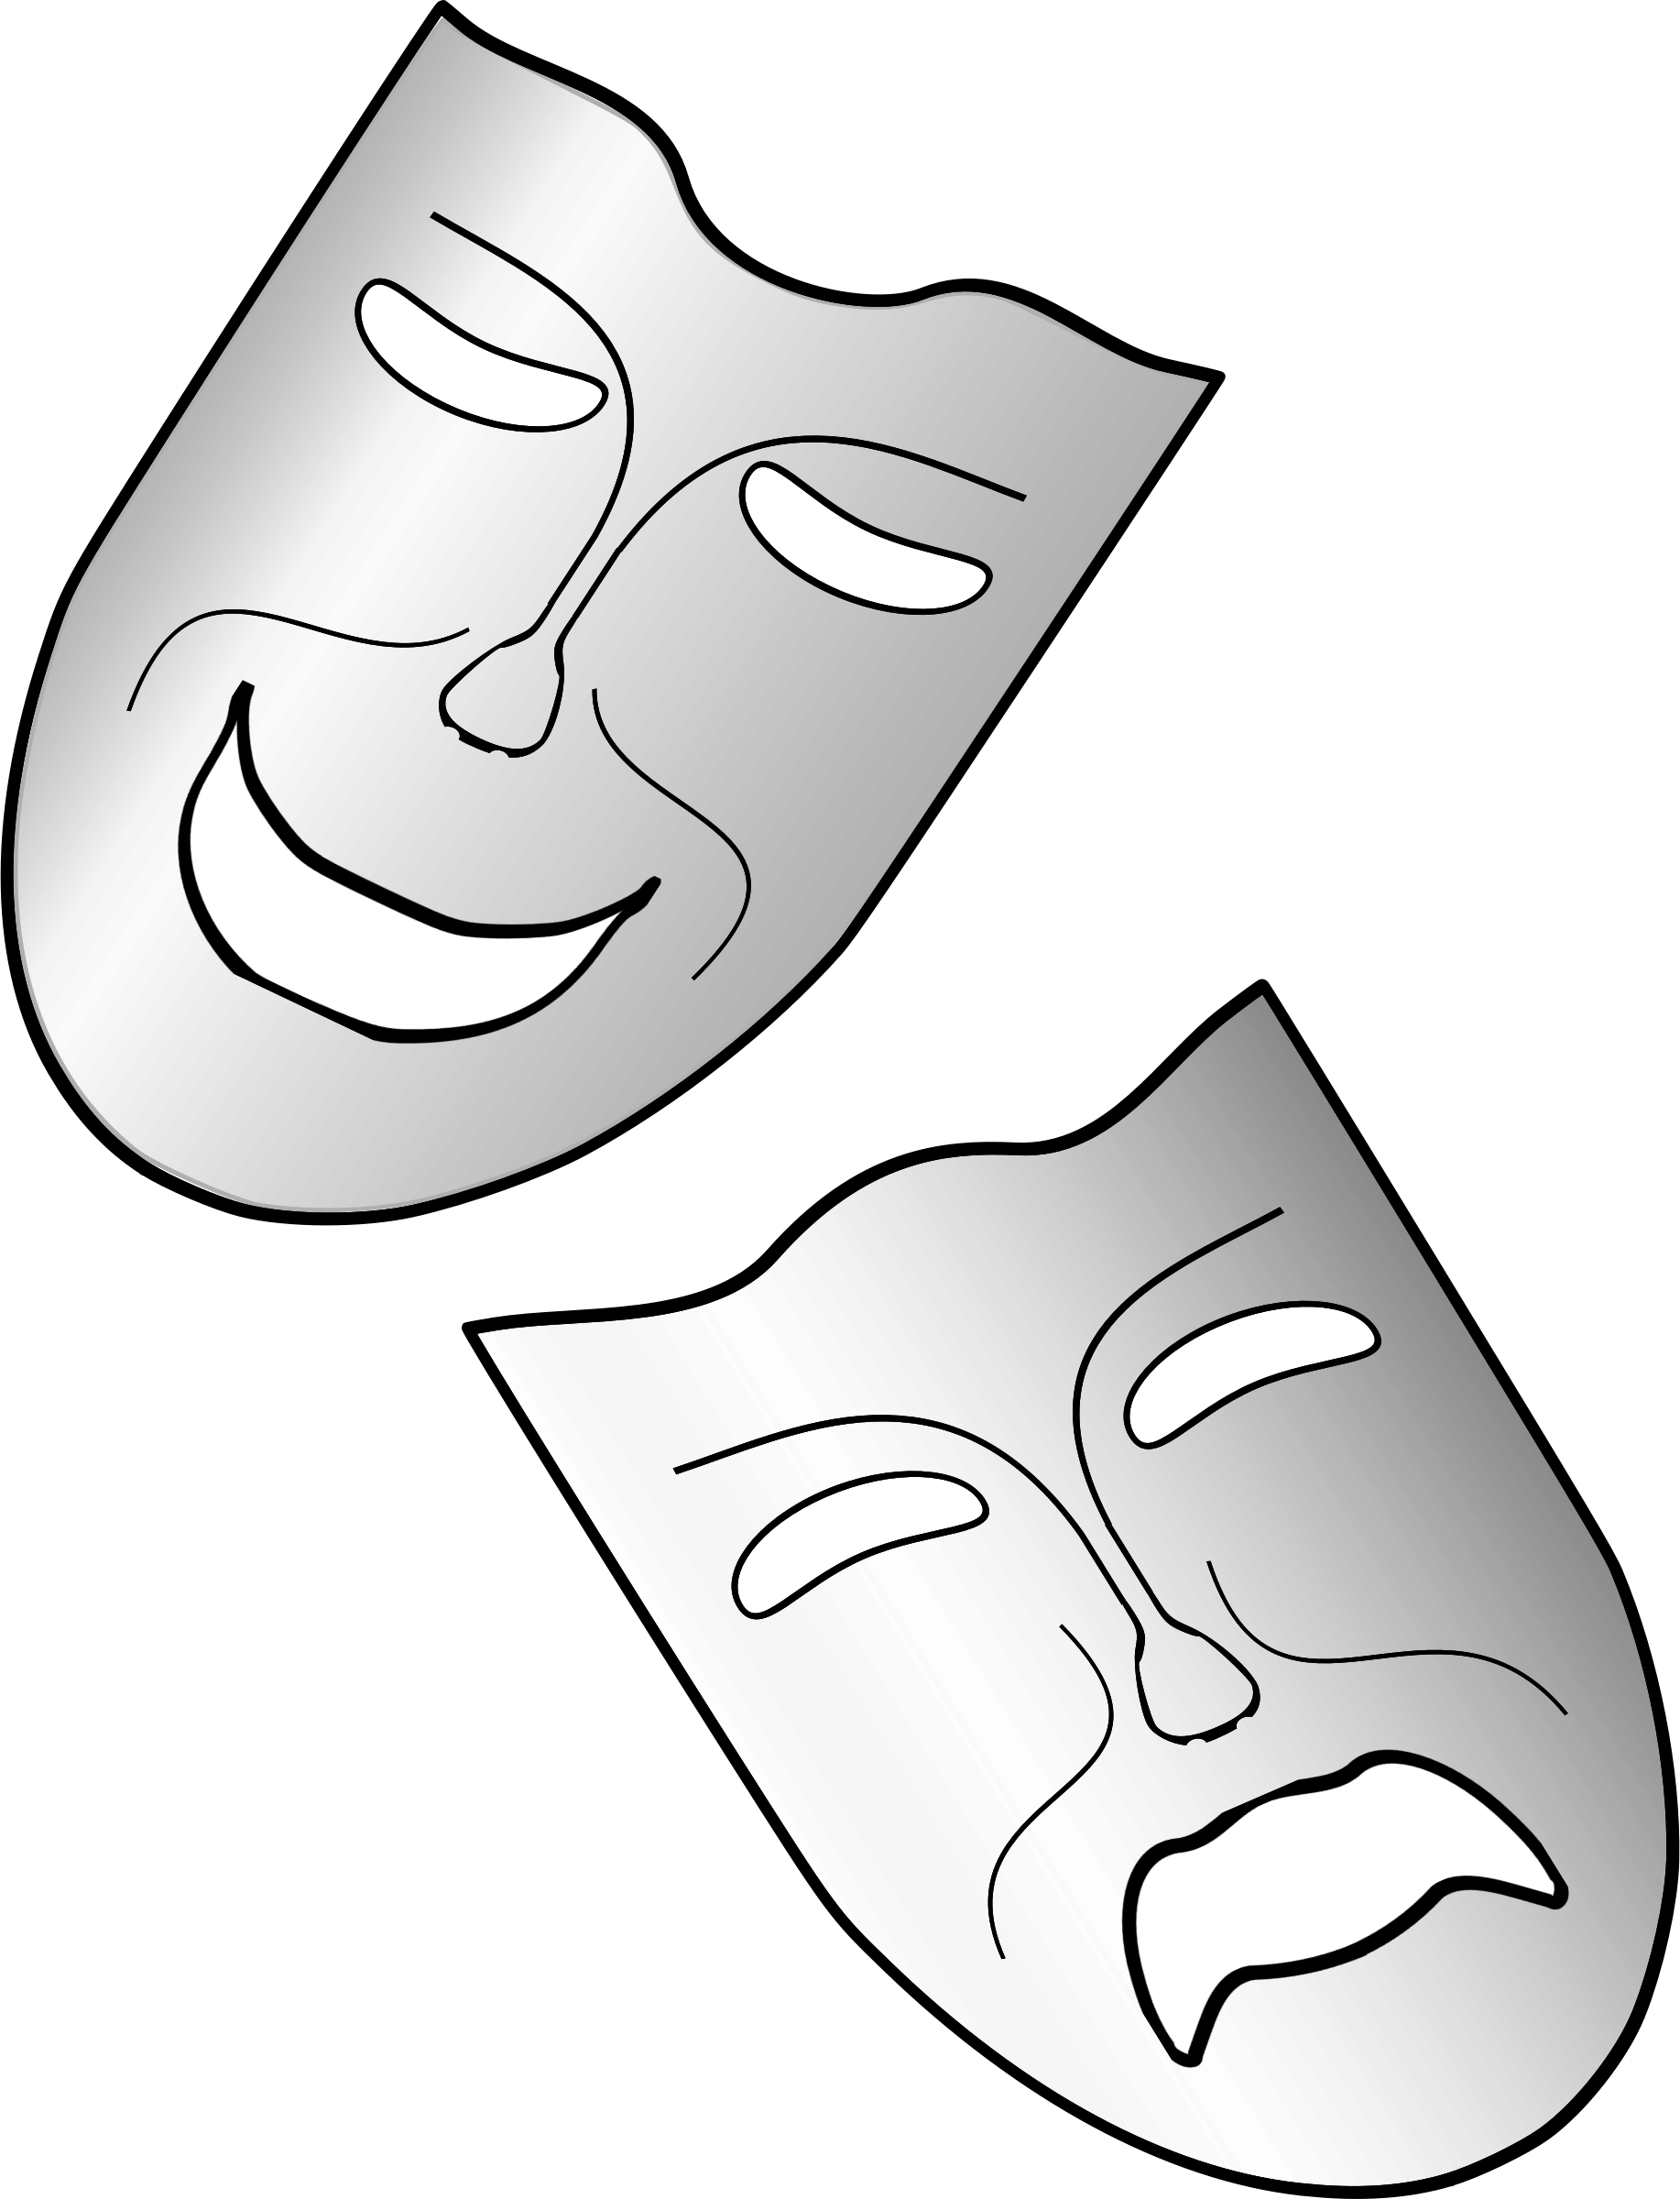 Театральные маски. Театральная маска трафарет. Театральная маска раскраска. Театральные маски раскраски для детей. Театральные маски для вырезания